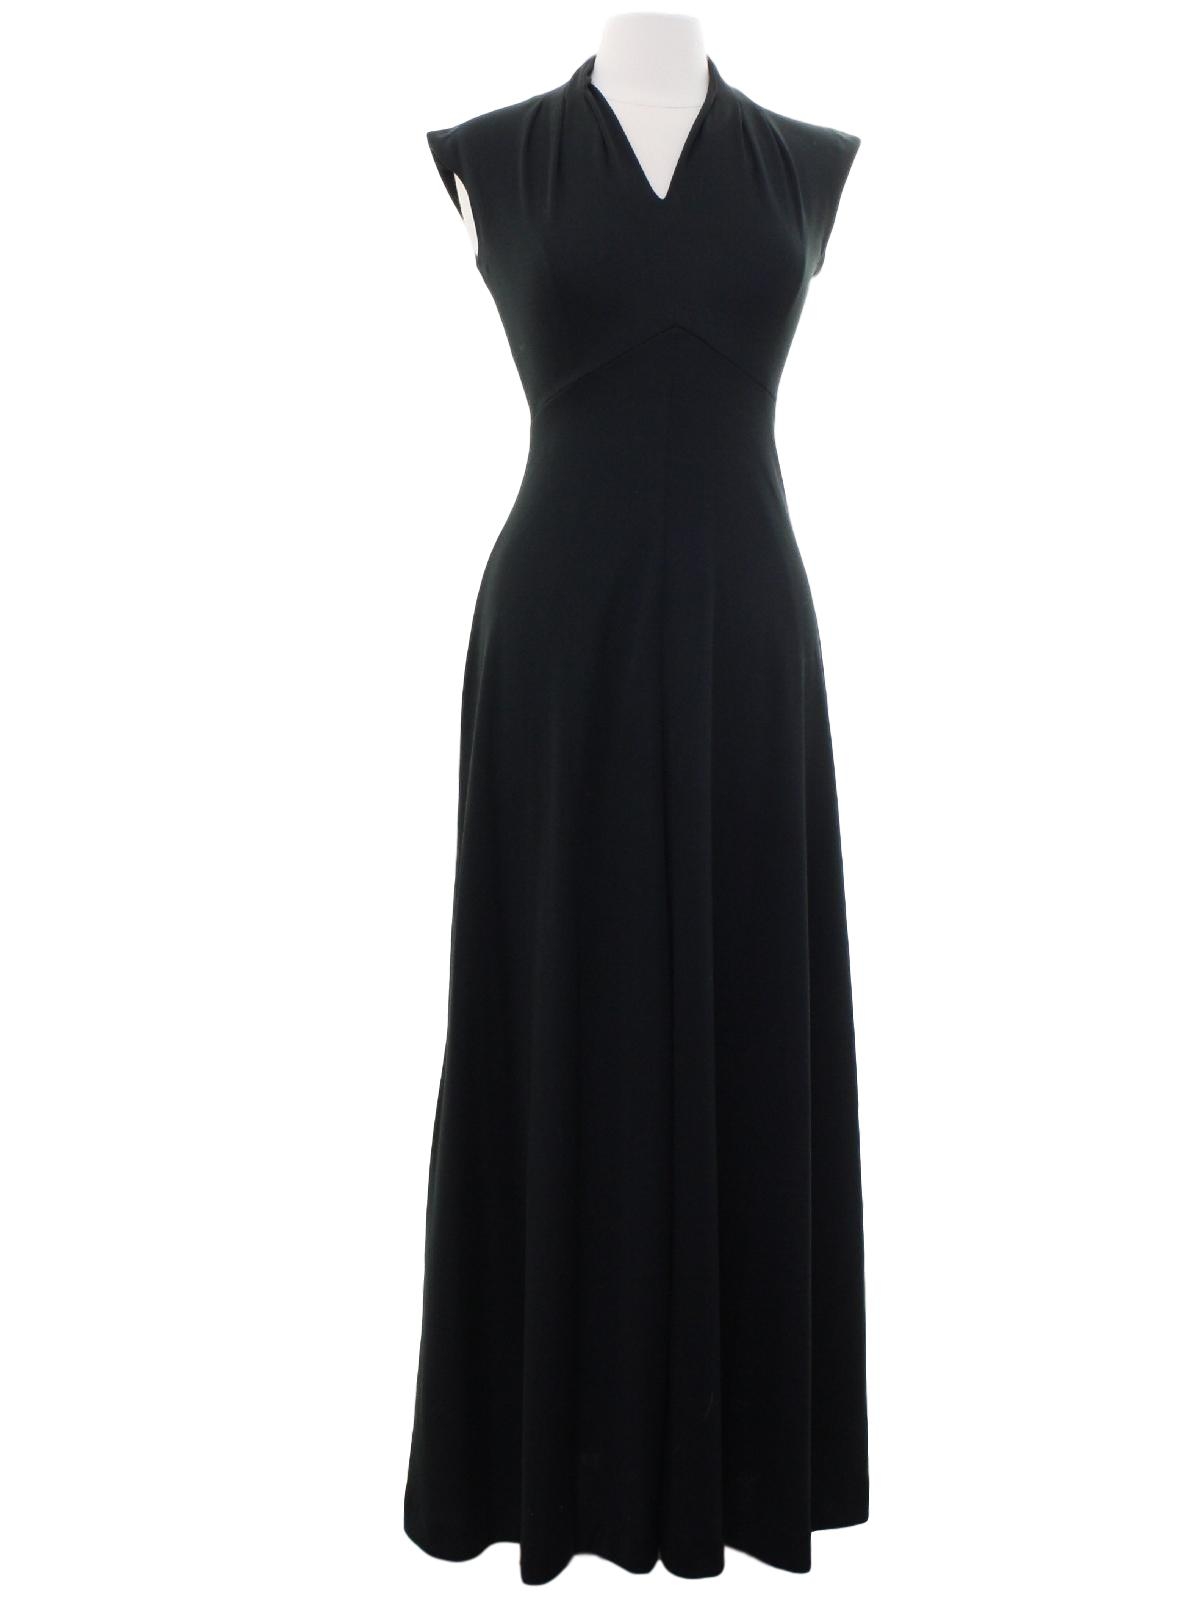 Retro 70s Dress (Fabric Label) : 70s -Fabric Label- Womens black ...